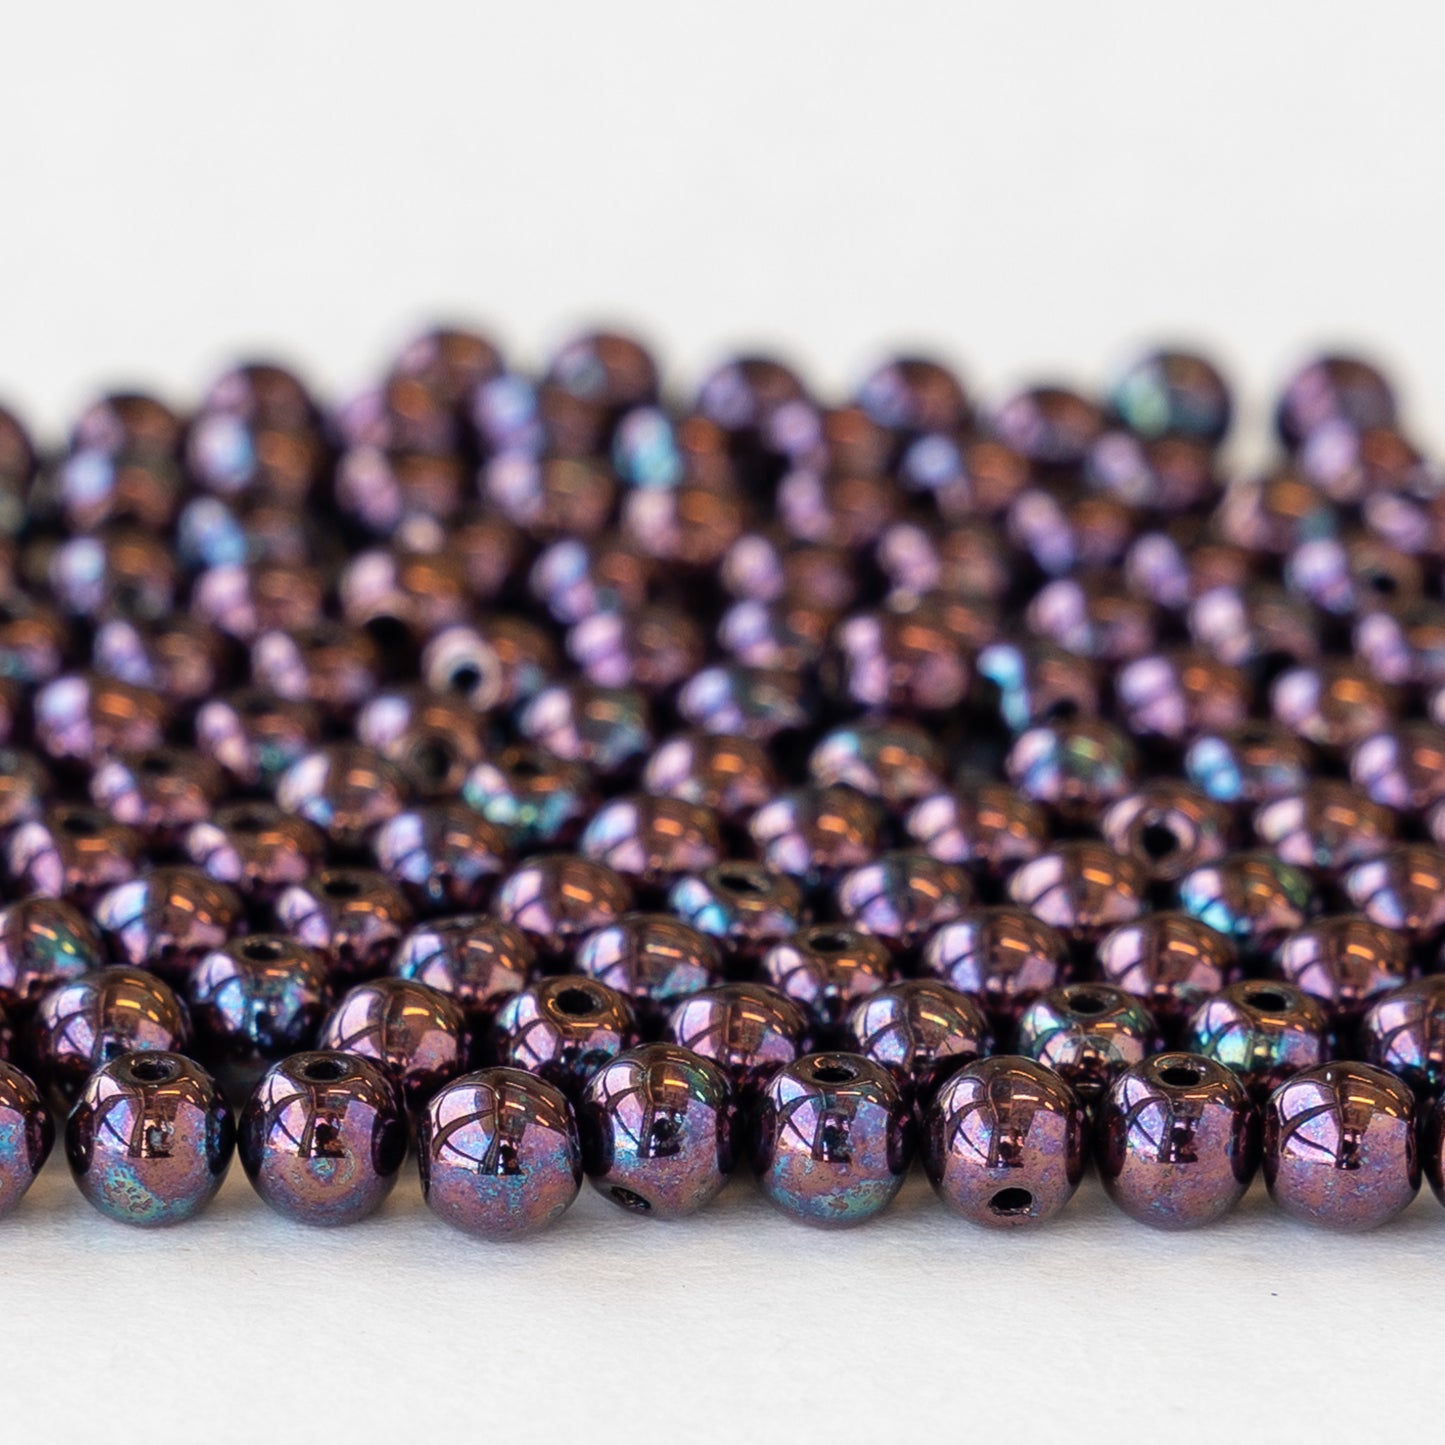 4mm Round Glass Beads - Deep Eggplant Purple - 100 Beads